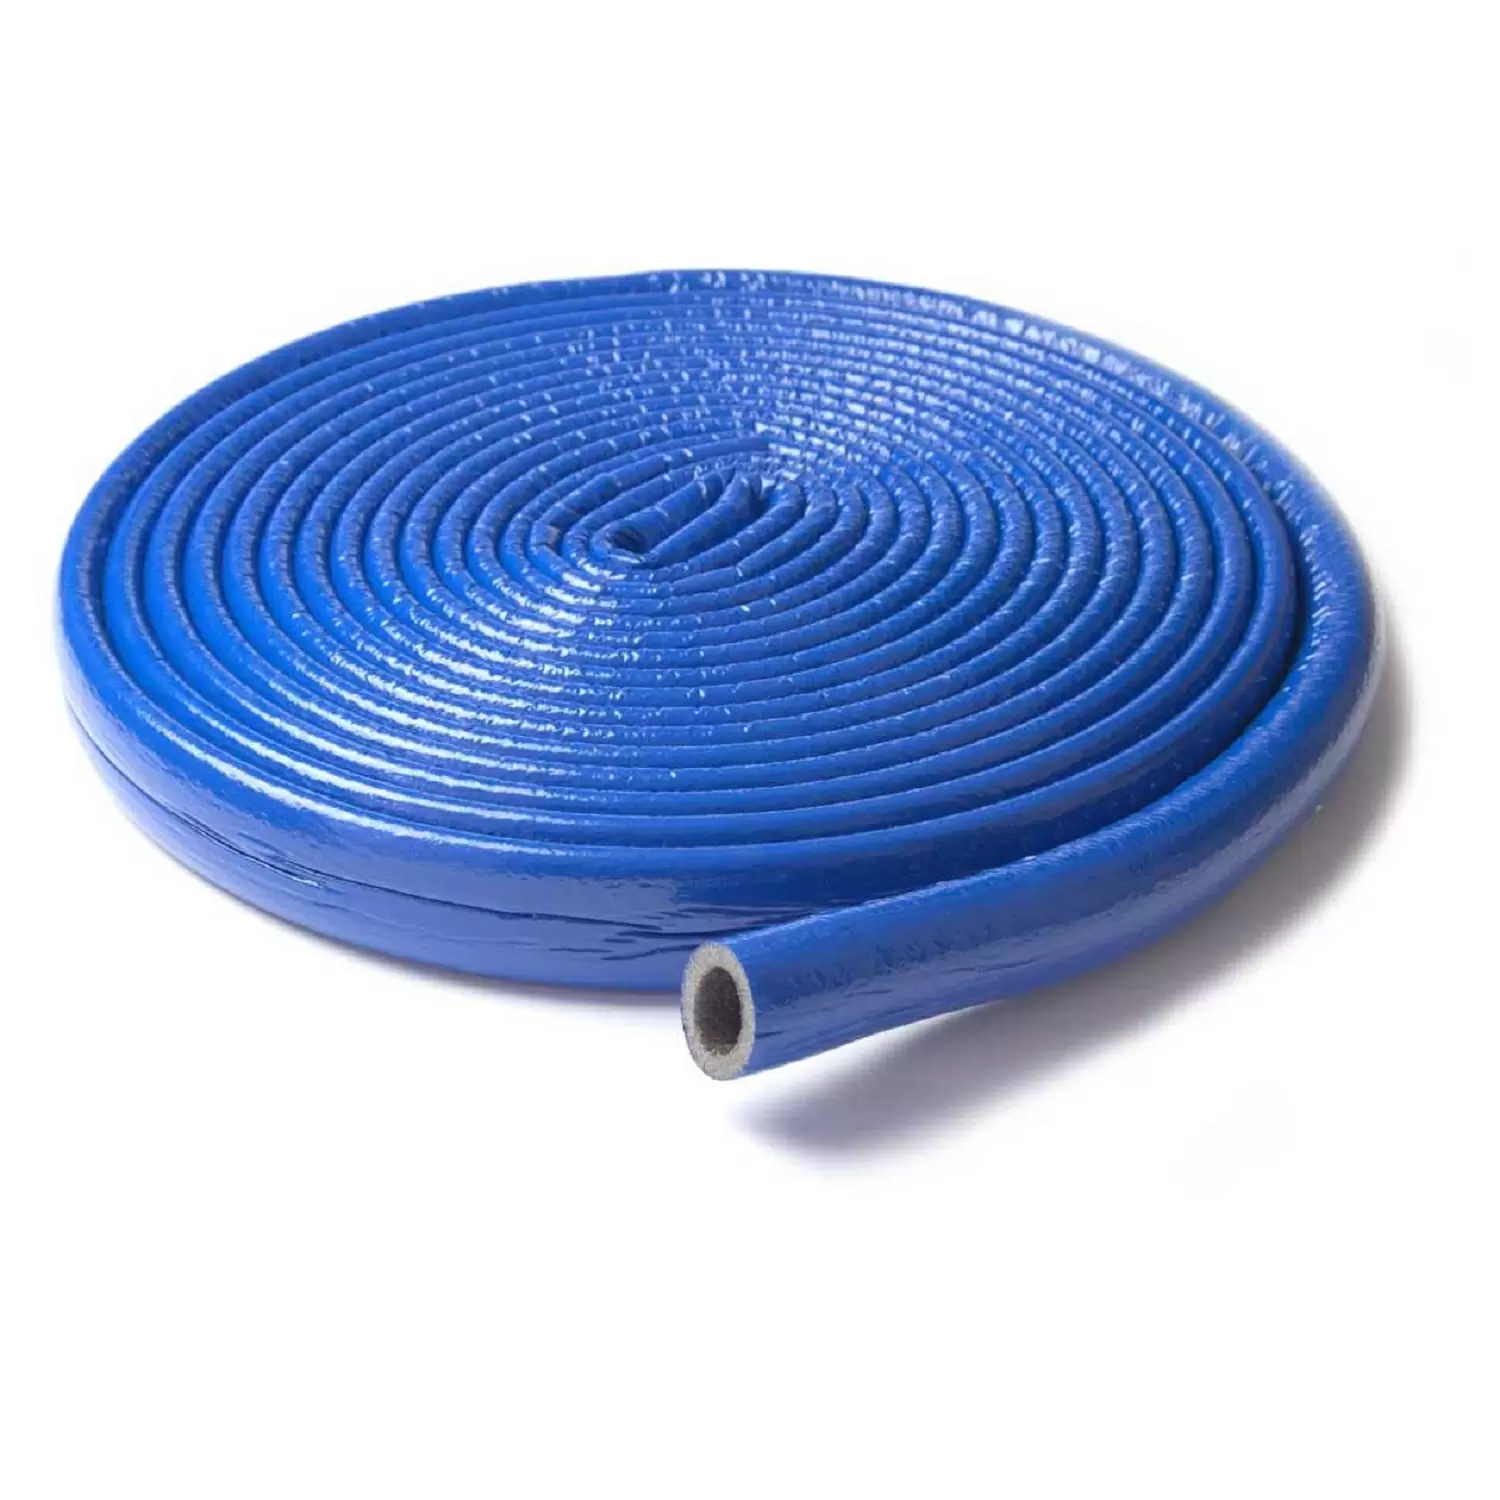 Теплоизоляция Энергофлекс супер протект 35/4 для труб диаметром 32 мм синяя, бухта 11 м